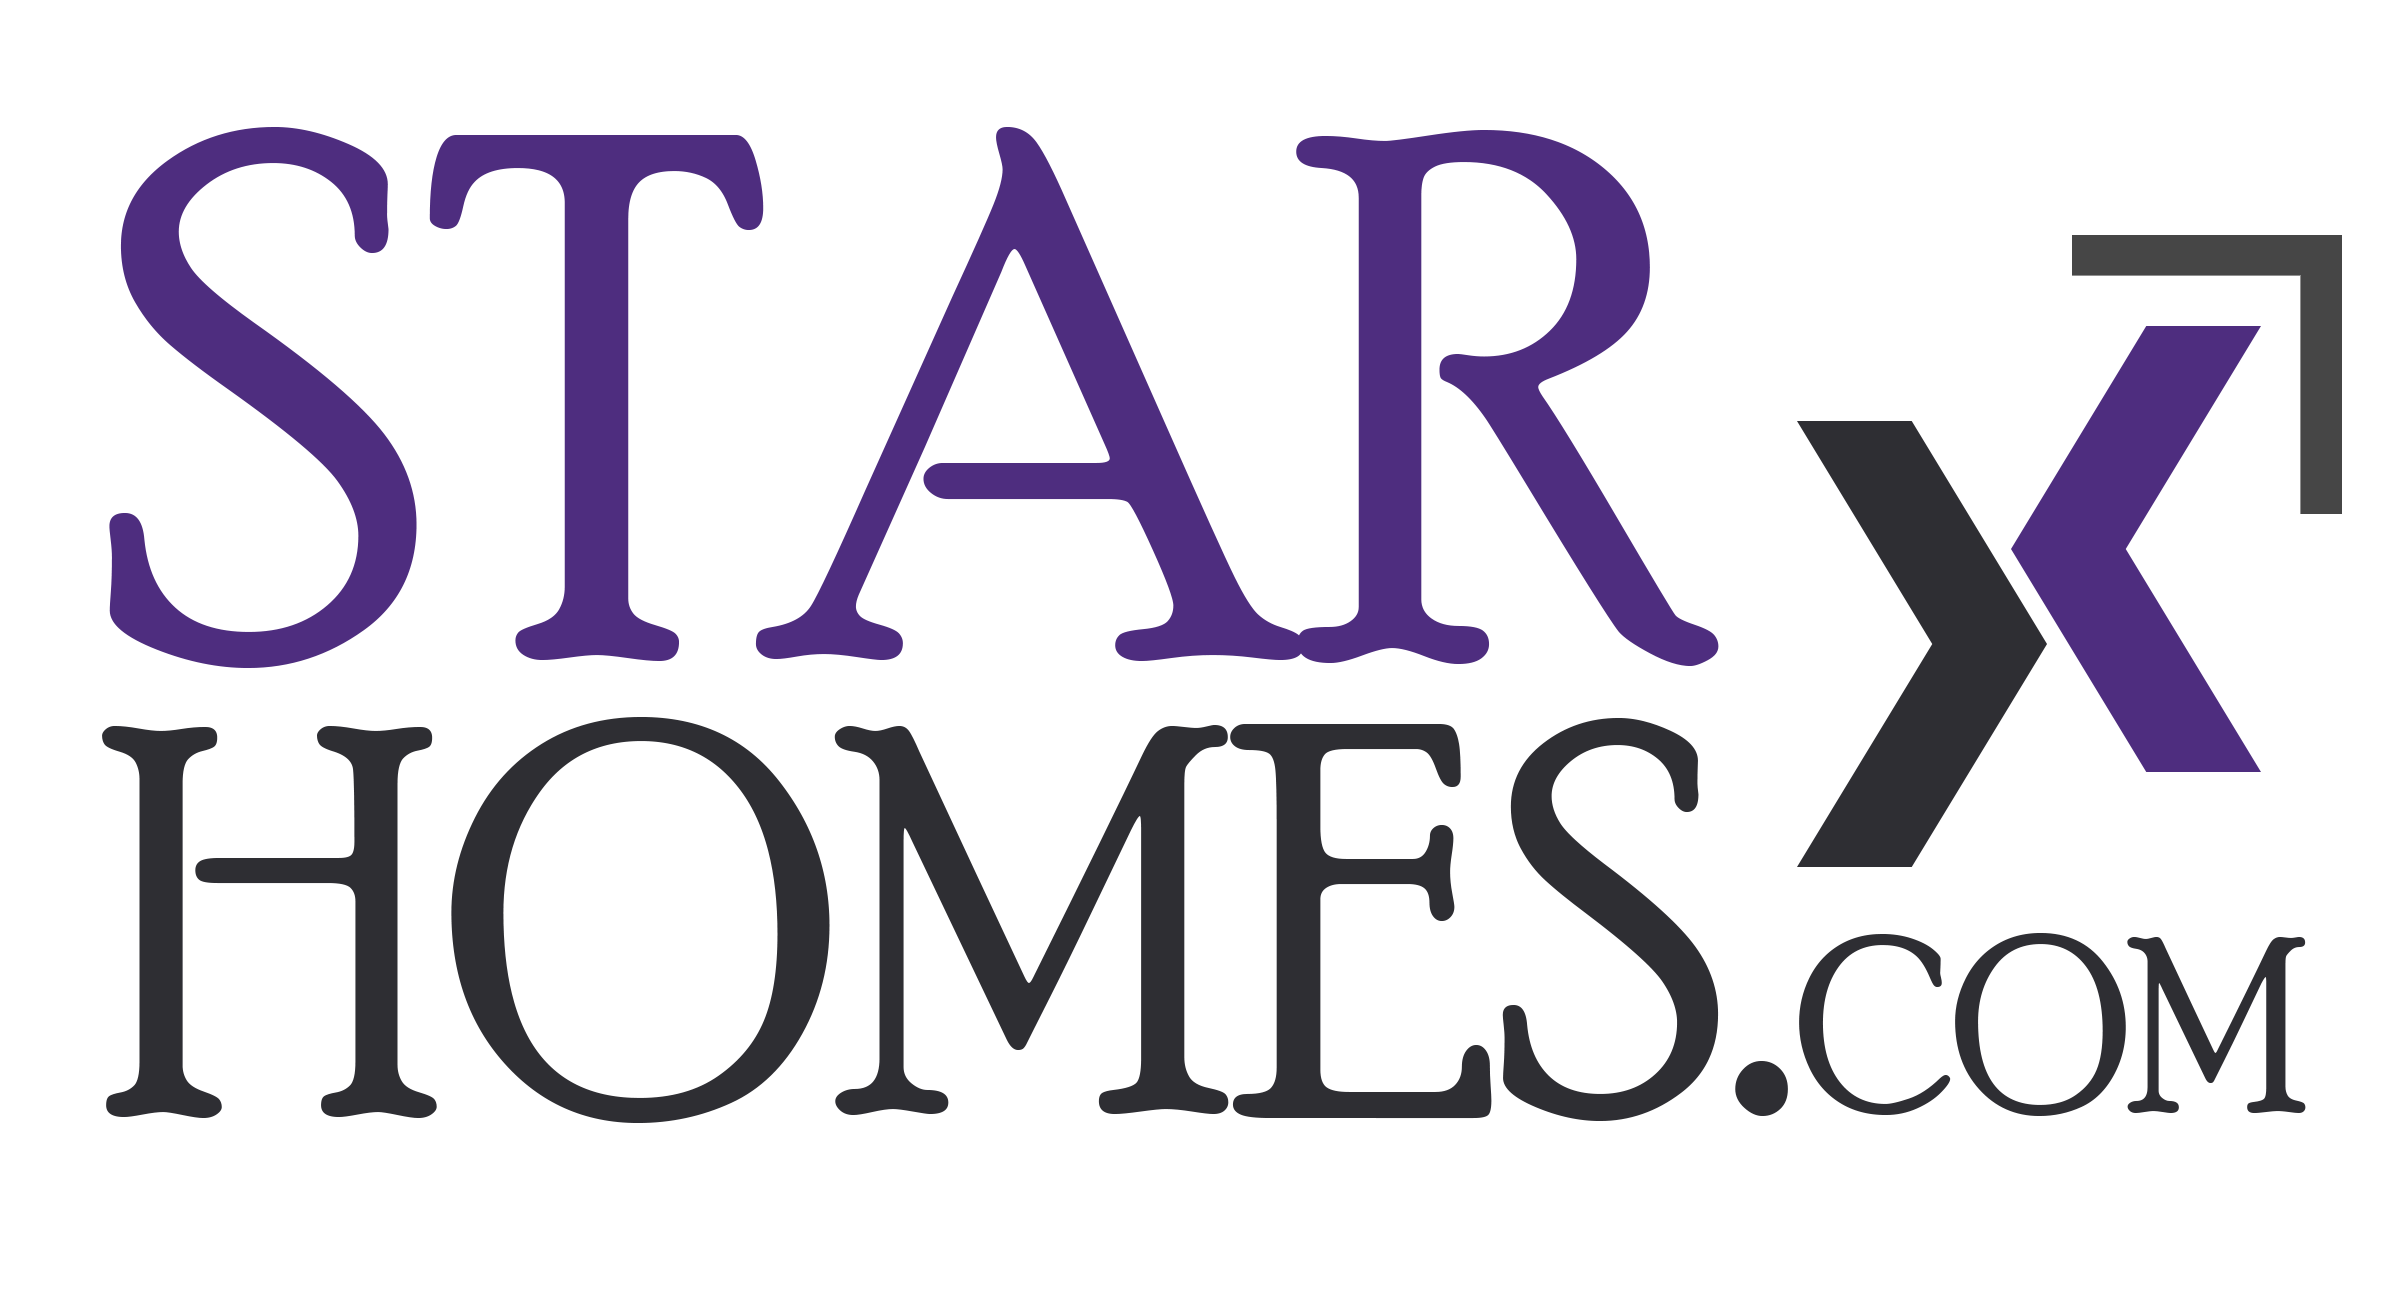 Scc Homes & Starx Homes